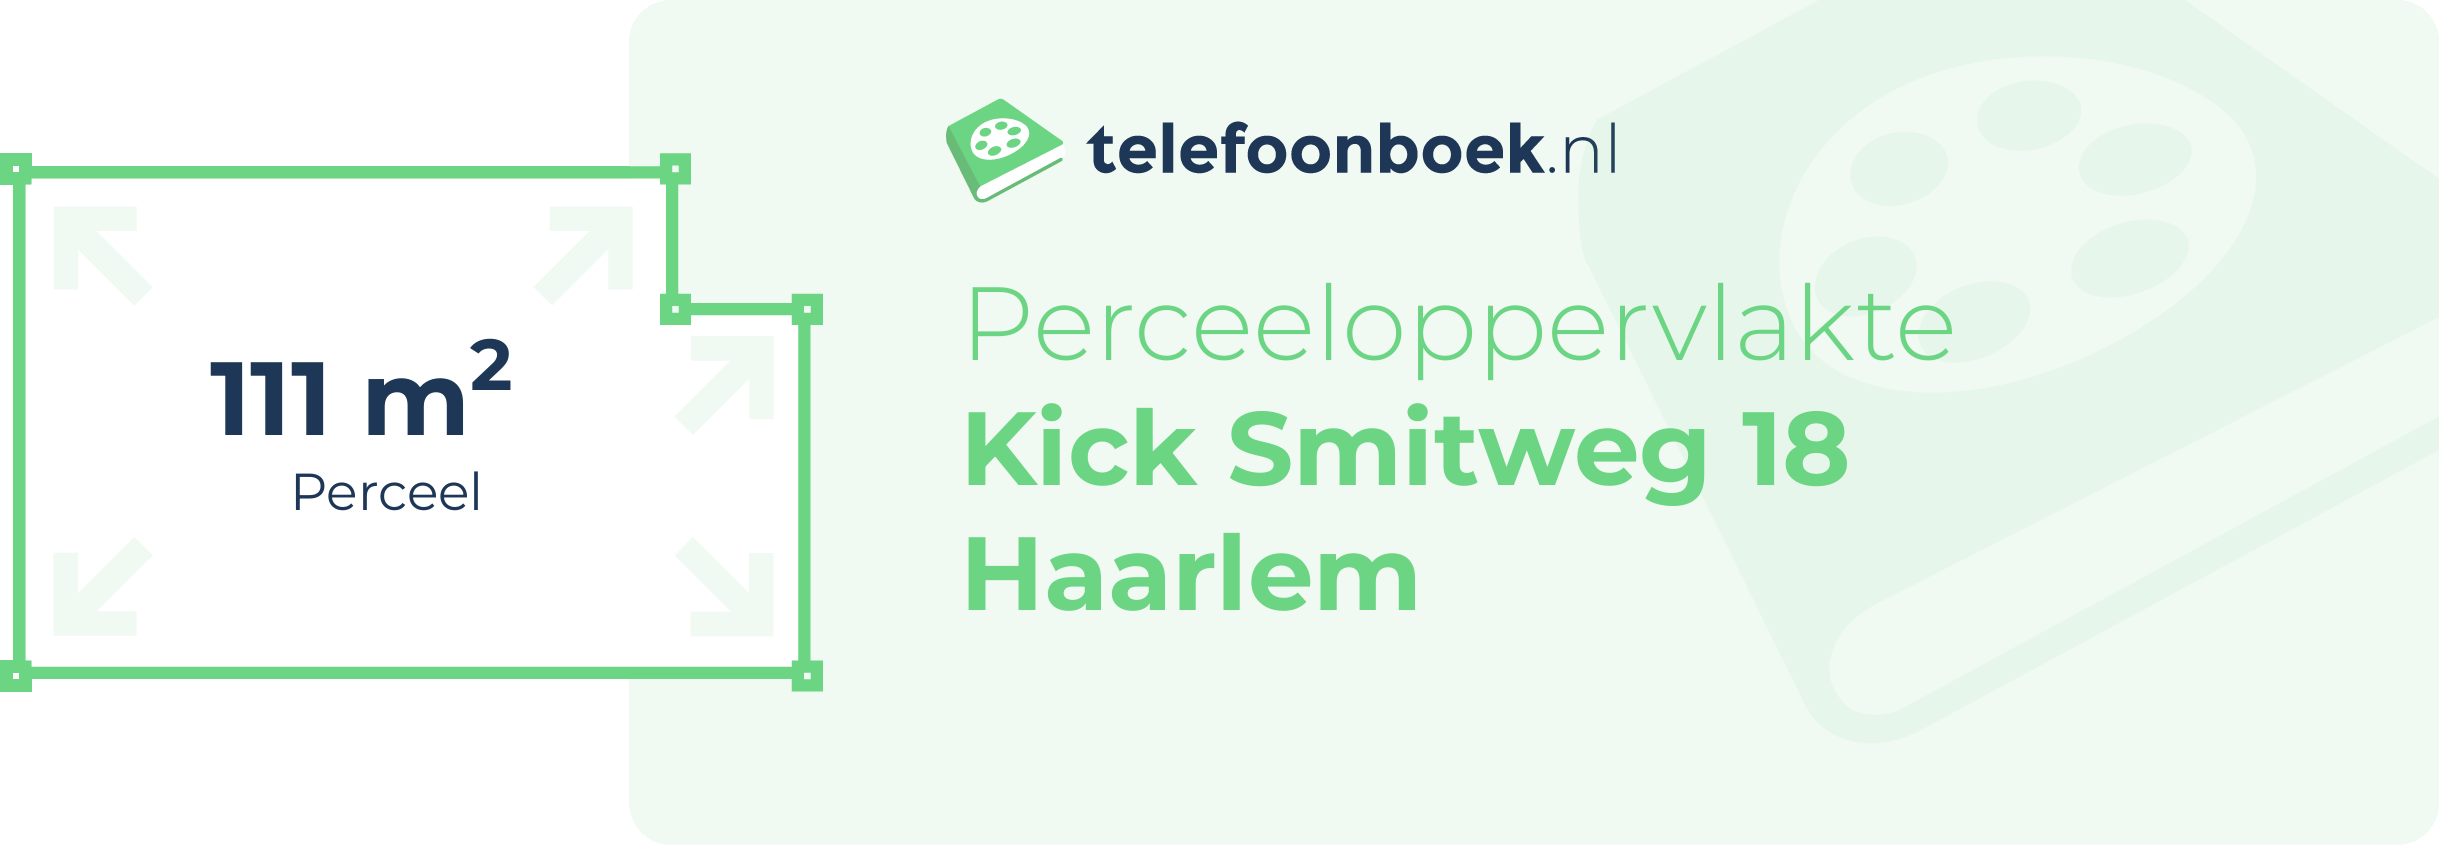 Perceeloppervlakte Kick Smitweg 18 Haarlem